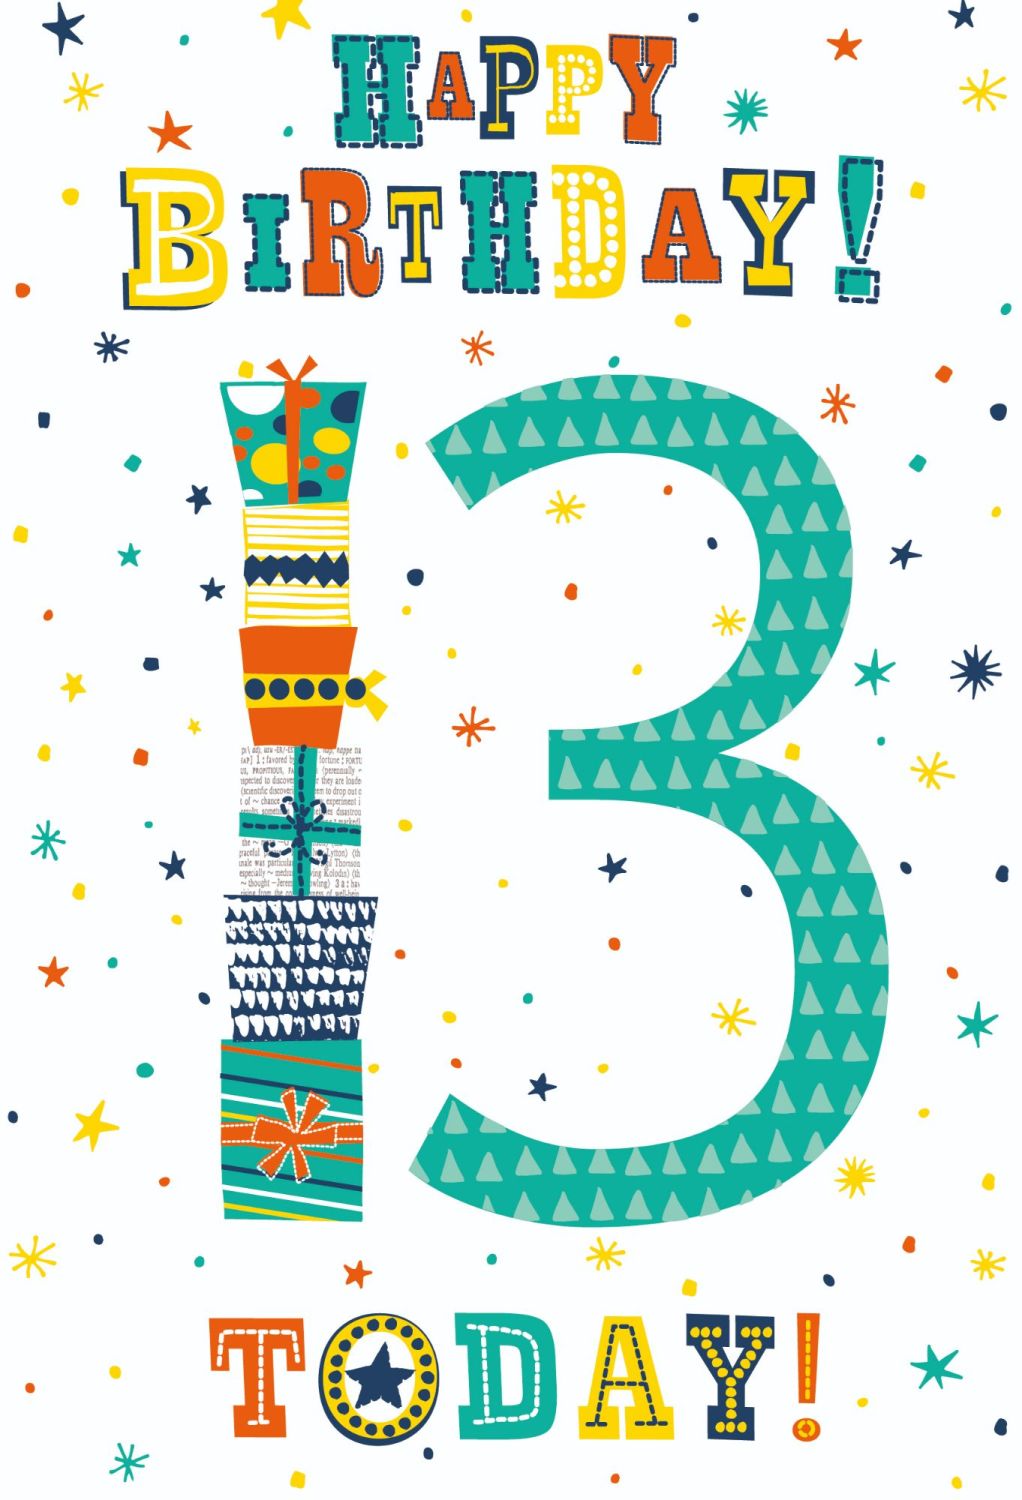 13th Birthday Cards - HAPPY Birthday 13 TODAY - Birthday CARD For